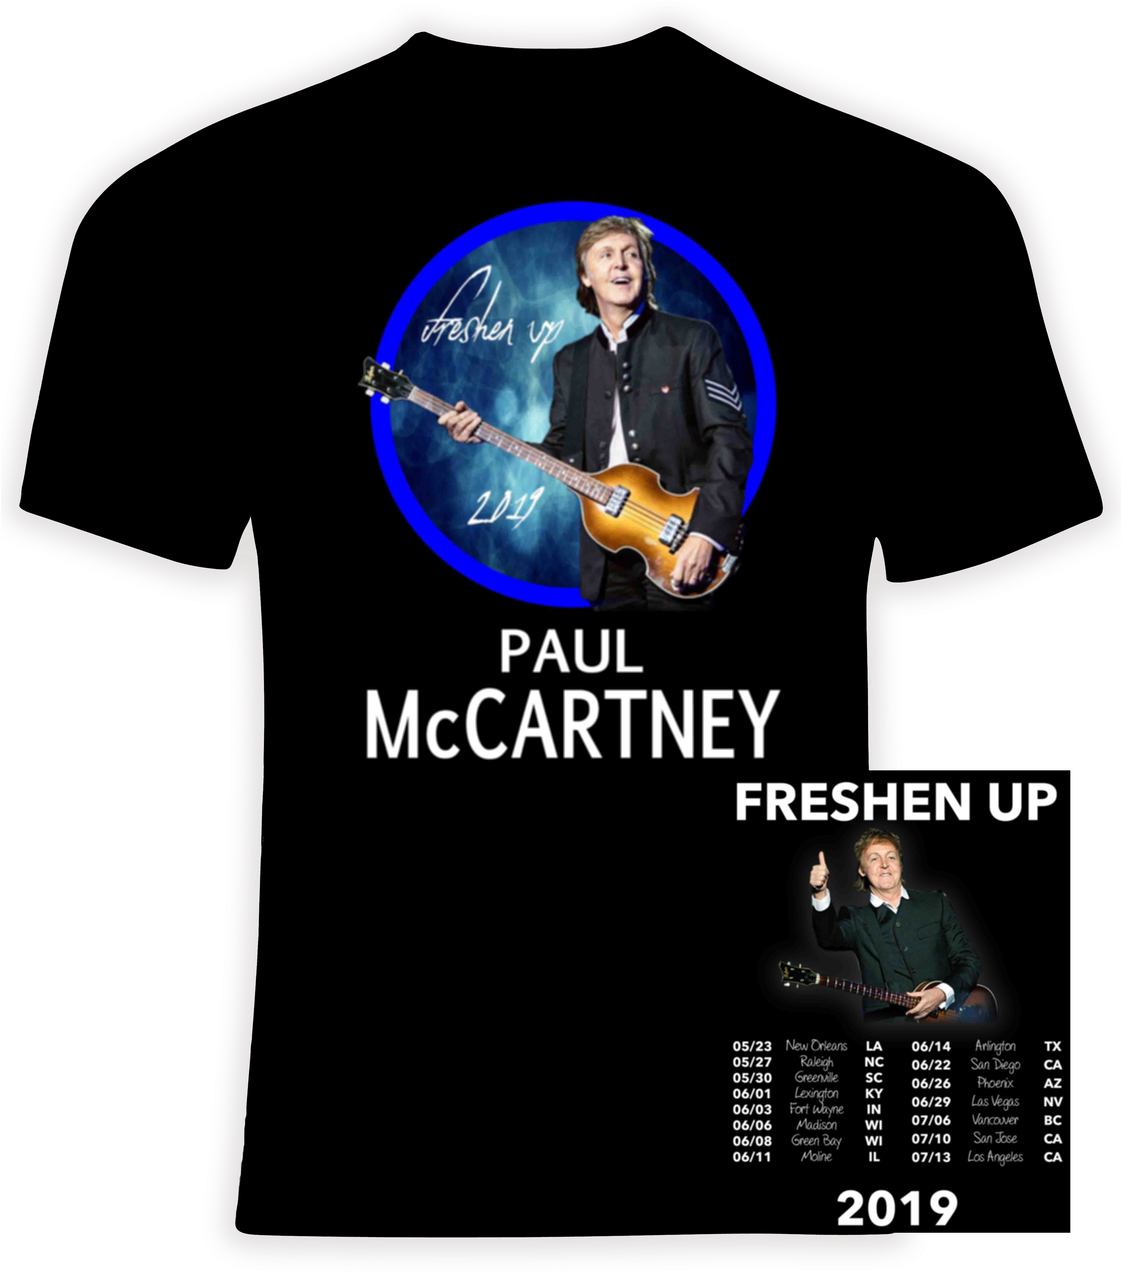 Paul Mc Cartney Freshen Up Tour2019 T Shirt Design PNG